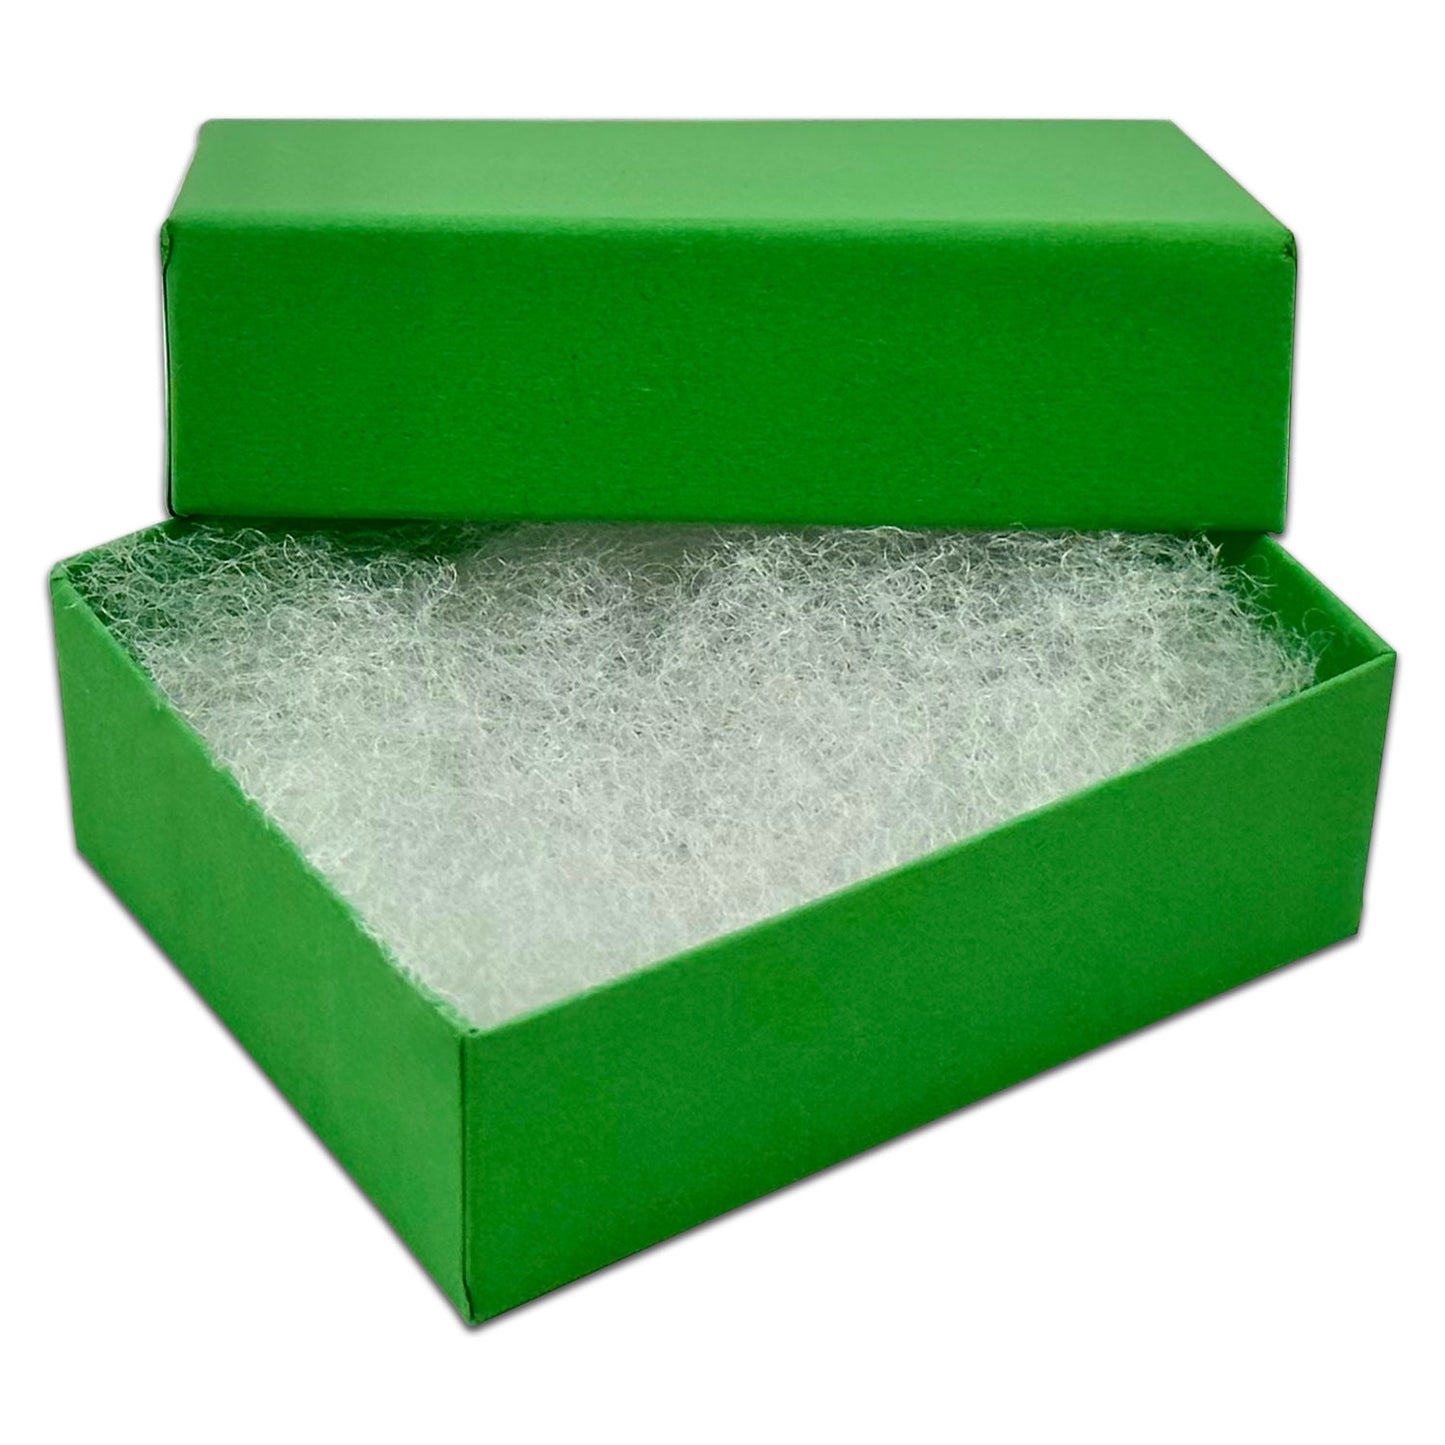 2 1/8" x 1 5/8" x 3/4" Light Green Cotton Filled Paper Box